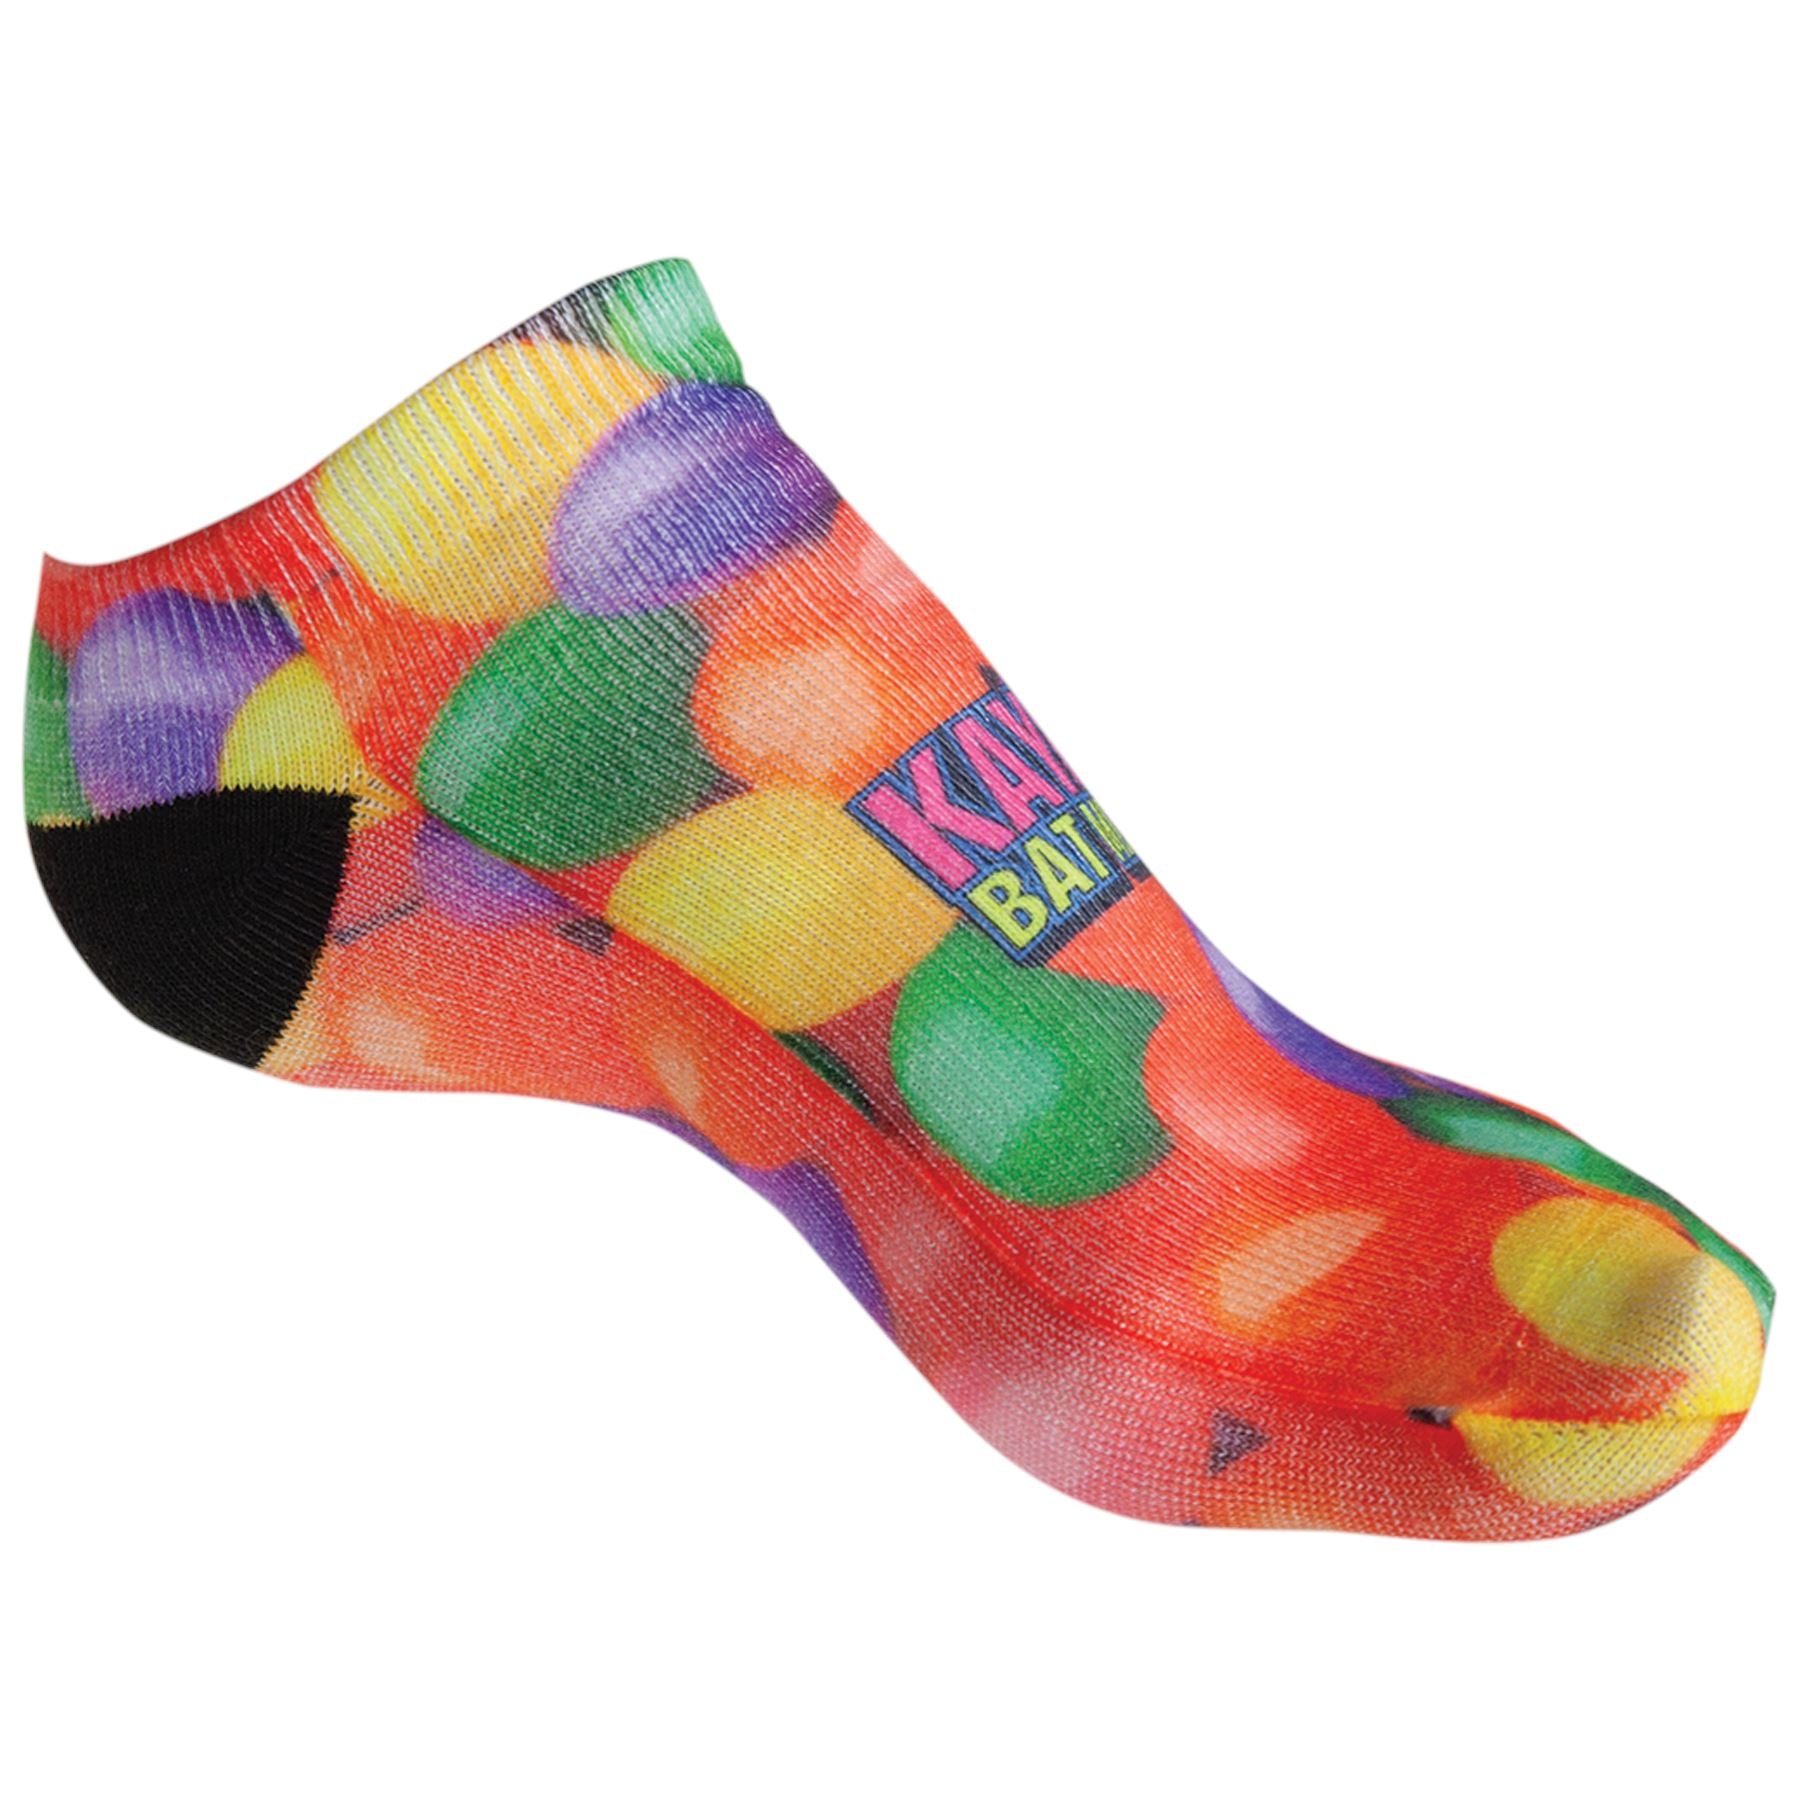 Unisex Adult No Show Socks (1 Pair), Full Color Dye Sub Socks Craftworks NW 